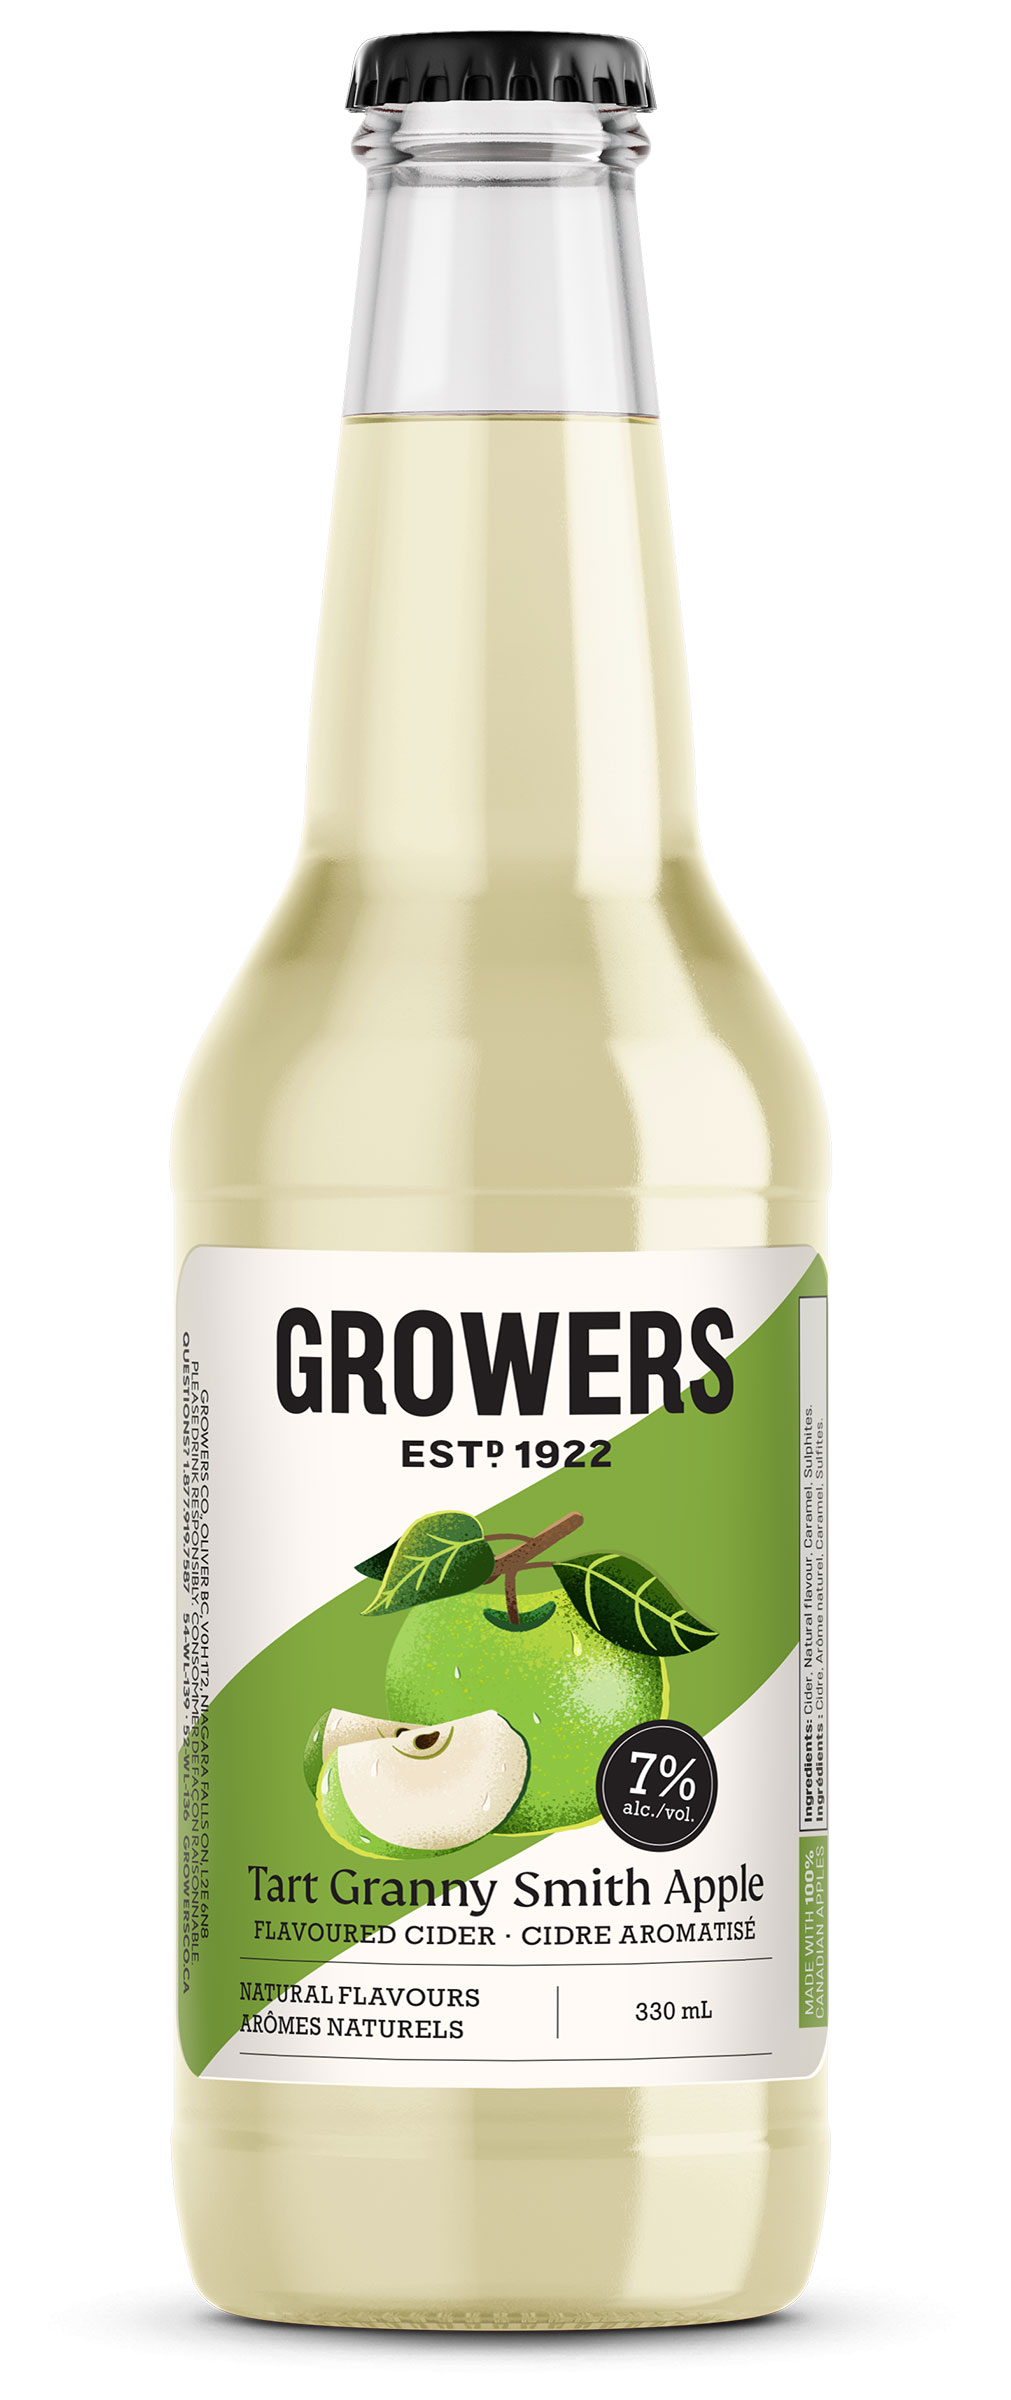 Bottle of Tart Granny Smith Apple Growers Cider